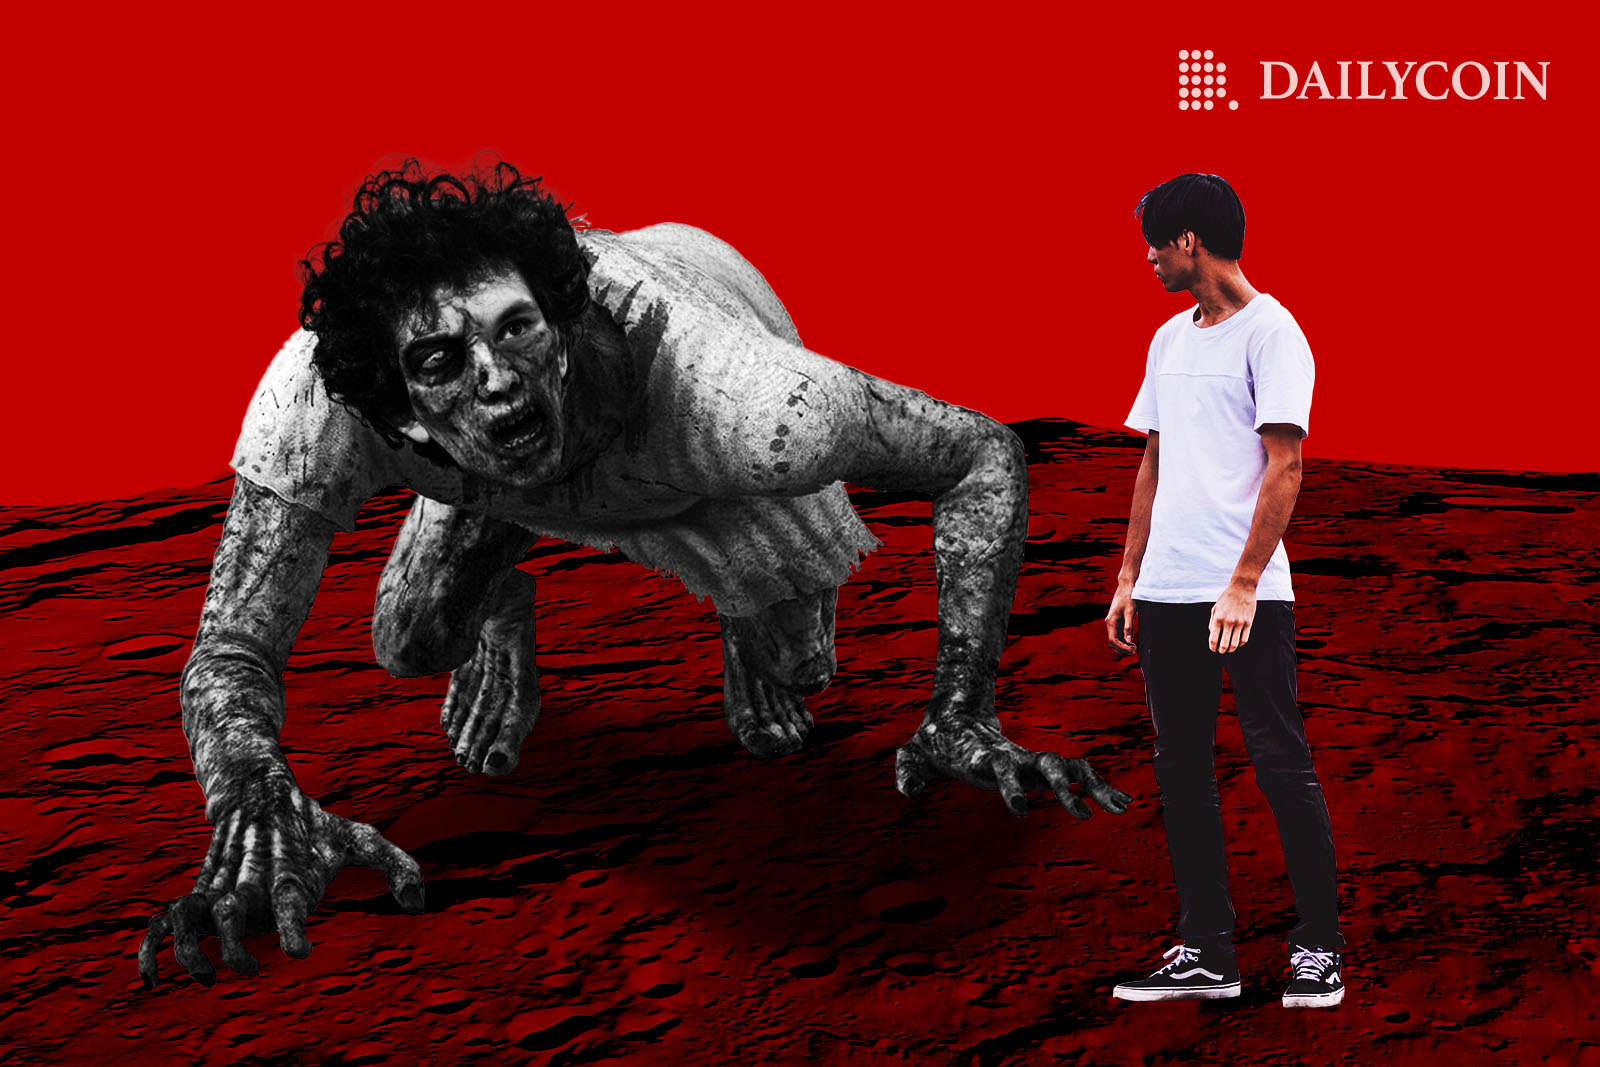 A zombie crawling towards a human